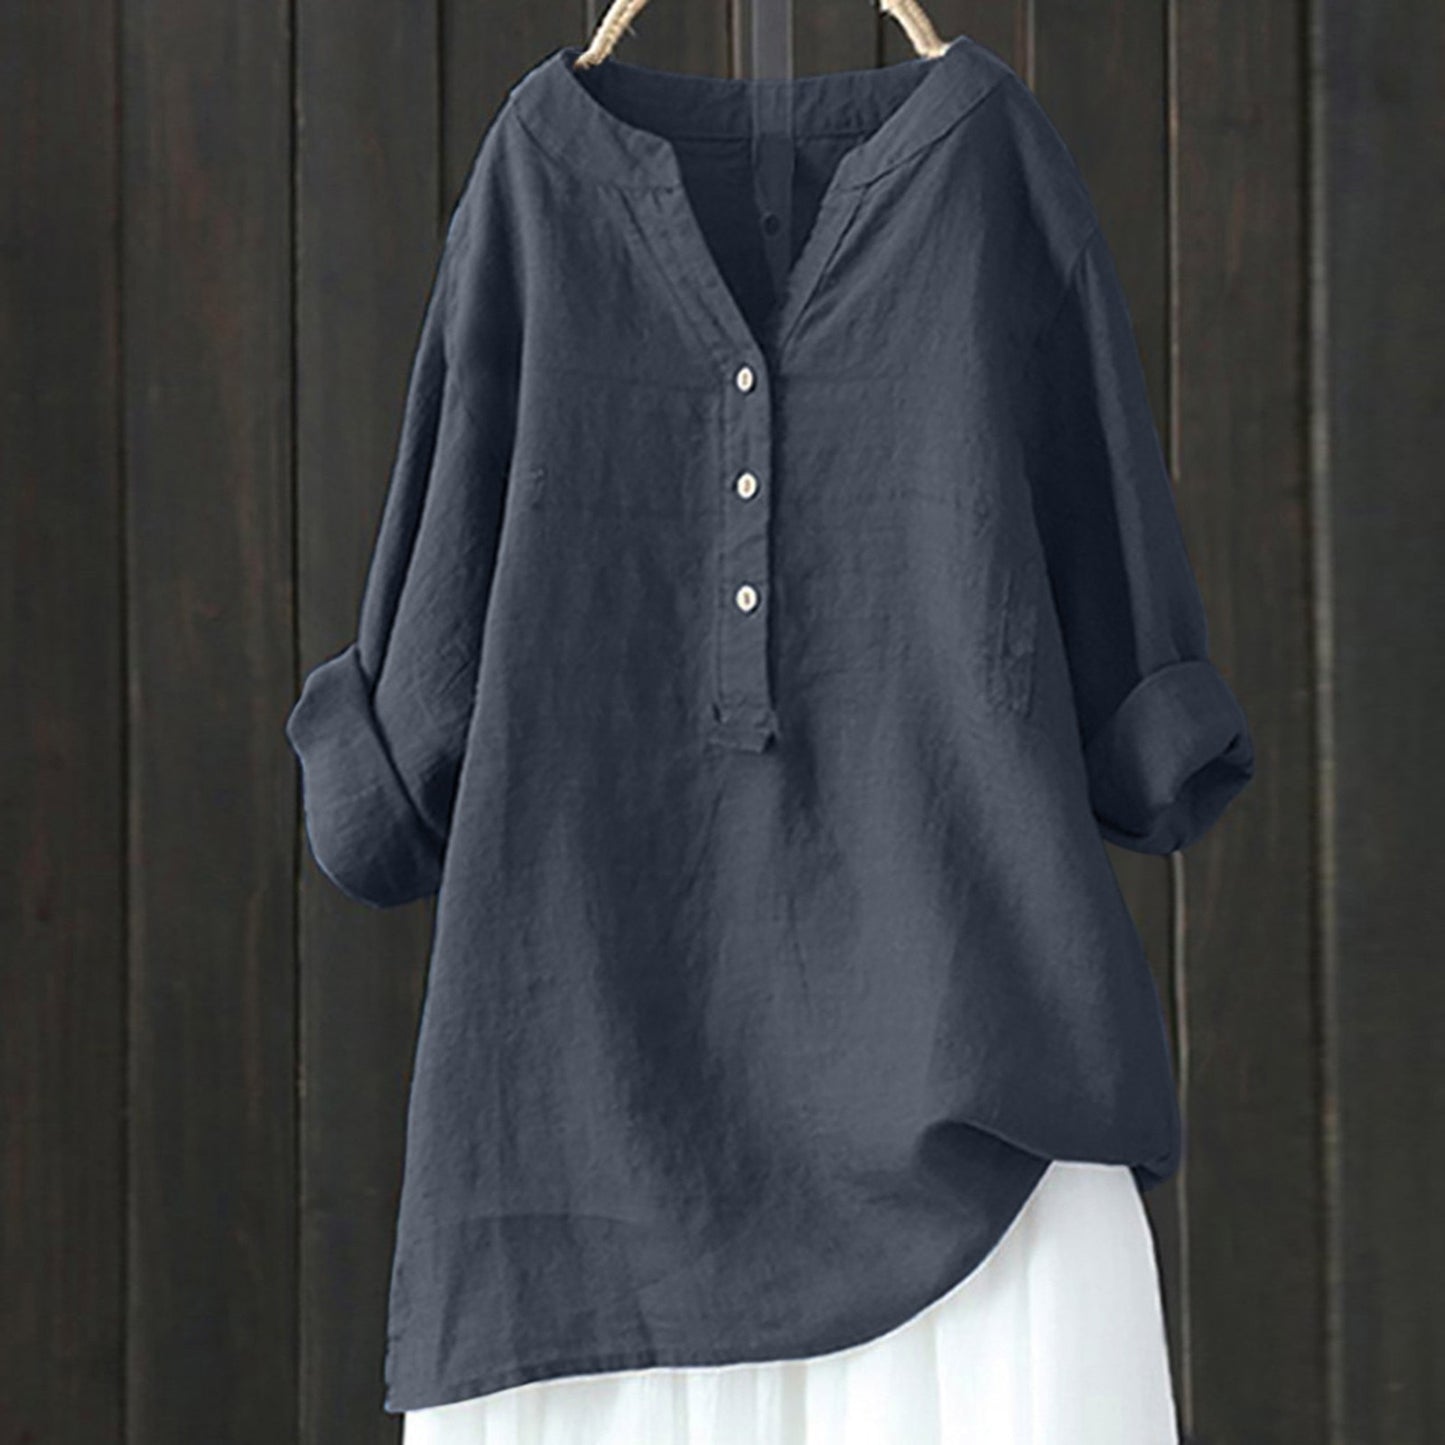 Women  Long Sleeved V-Neck Casual Loose Cotton Linen Shirts